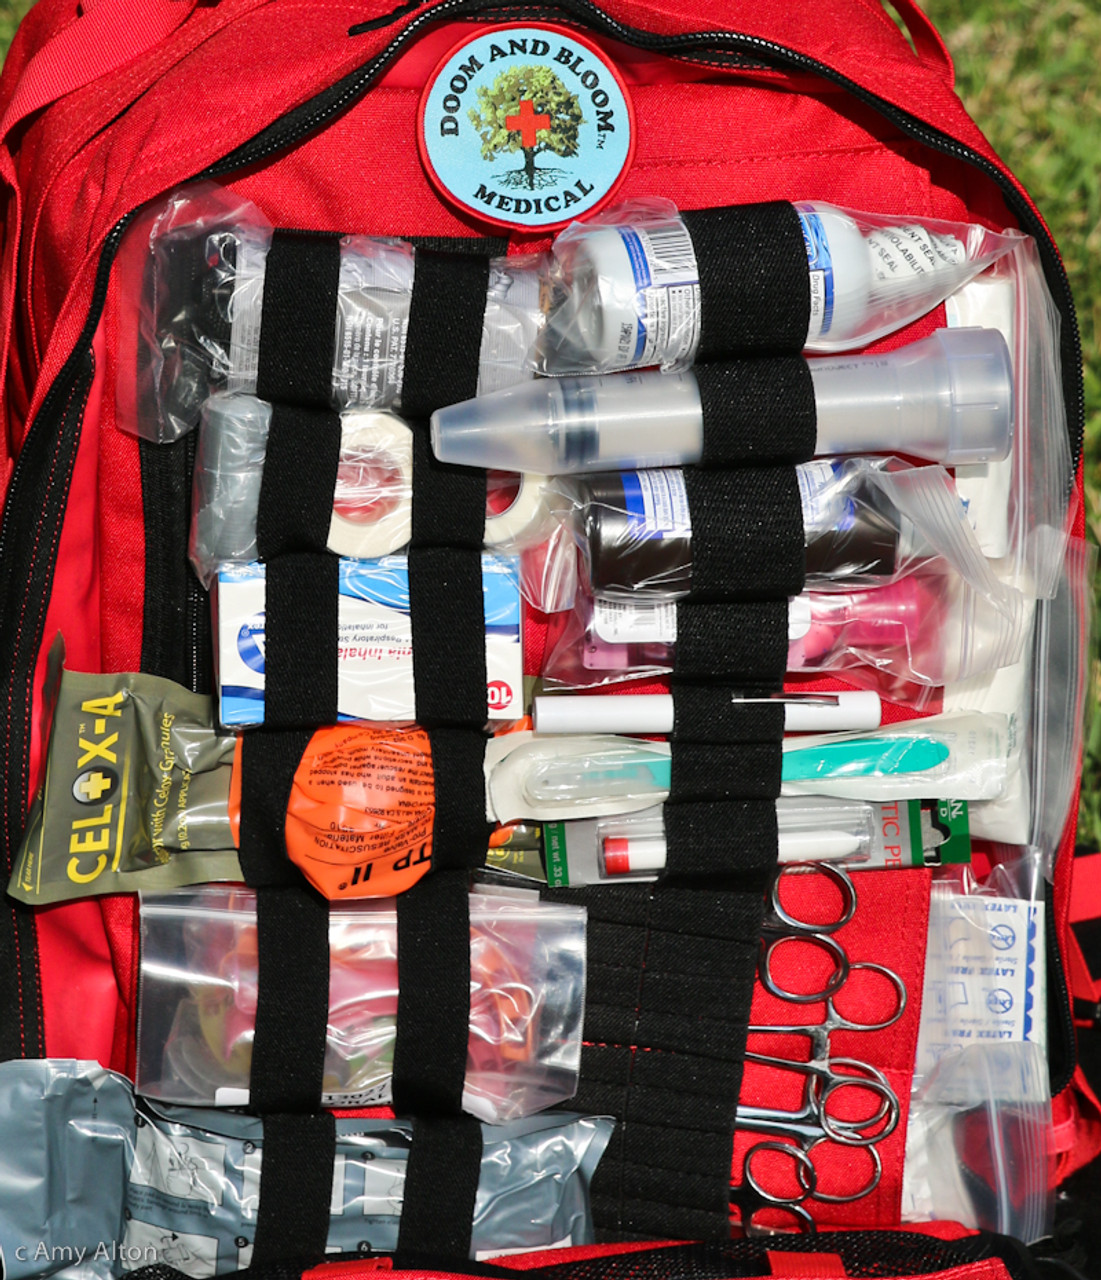 Get Home Bag / Survival Kit - The Survival University